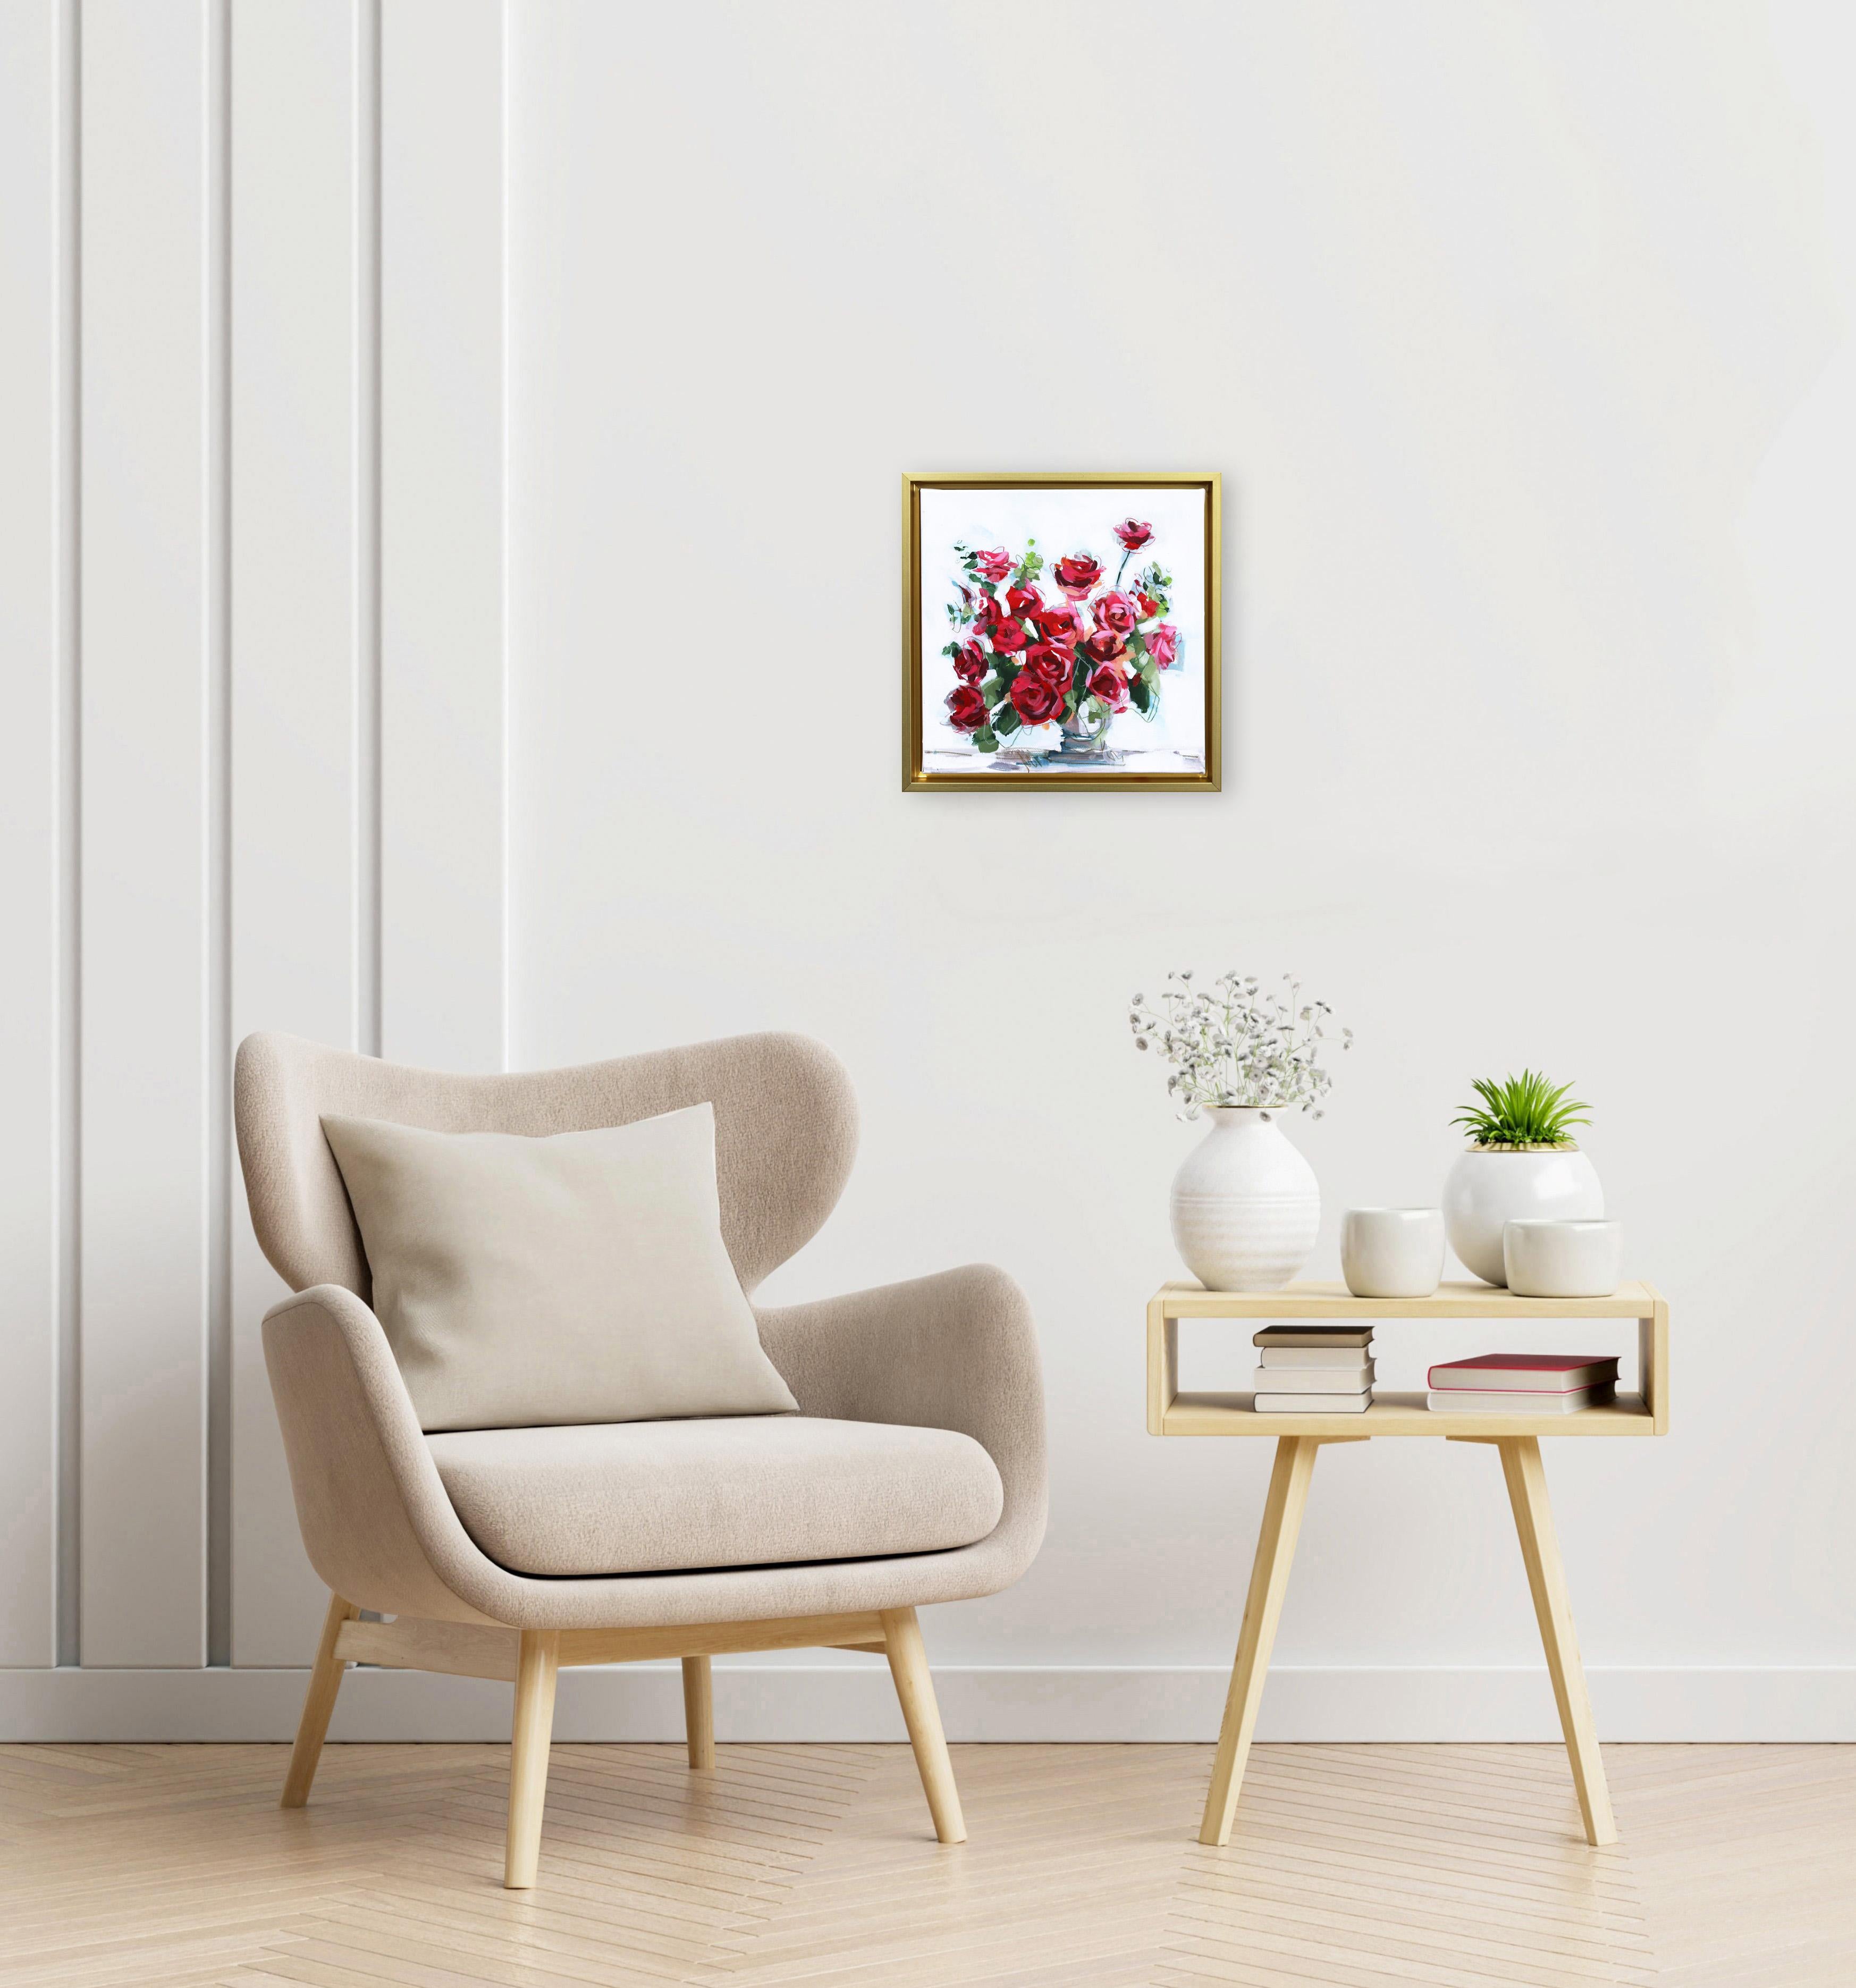 You Deserve More Than A Dozen Roses  - Original Framed Floral Painting on Canvas For Sale 4